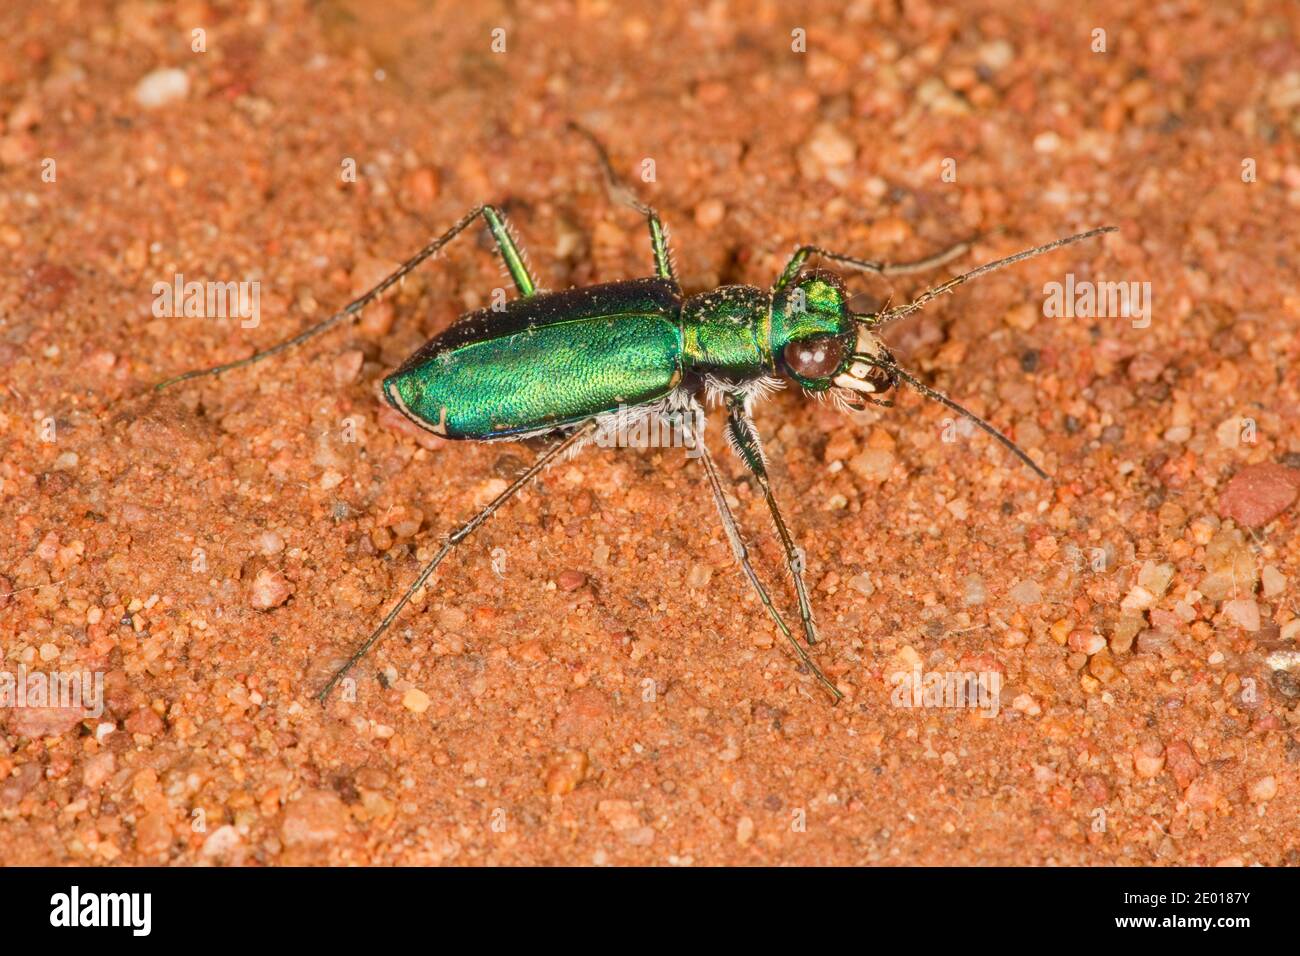 Tiger Beetle forato, Cicindelidia punctulata chihuahuae, Cicindelinae, Carabidae. Lunghezza 11.5 mm. Foto Stock